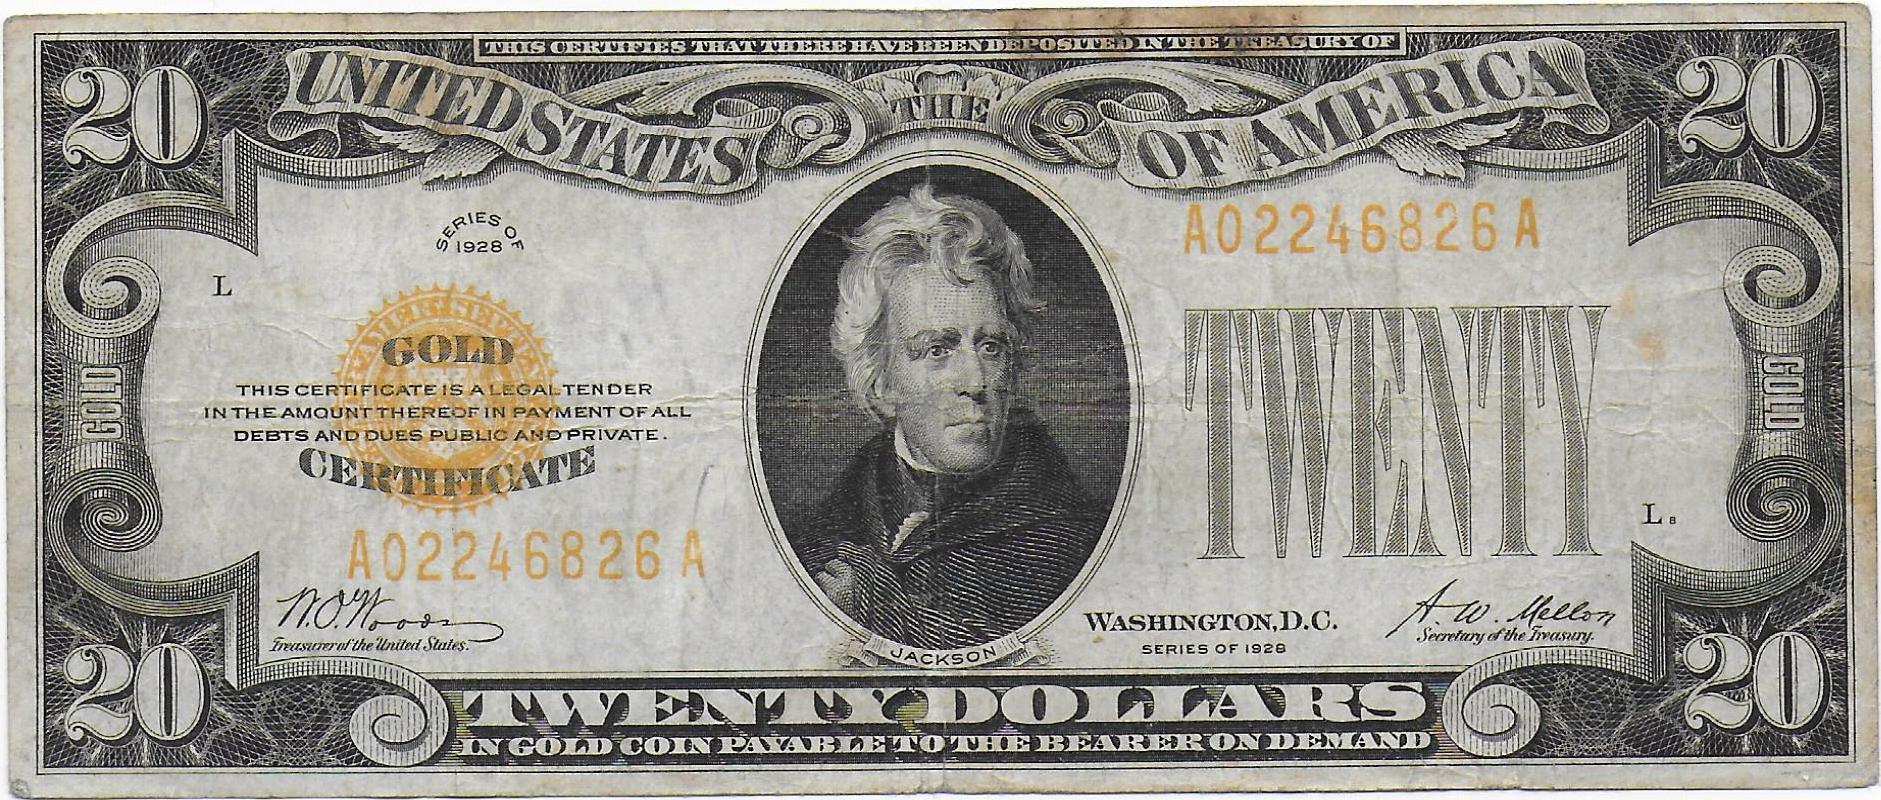 United States Twenty Dollars gold front.jpg